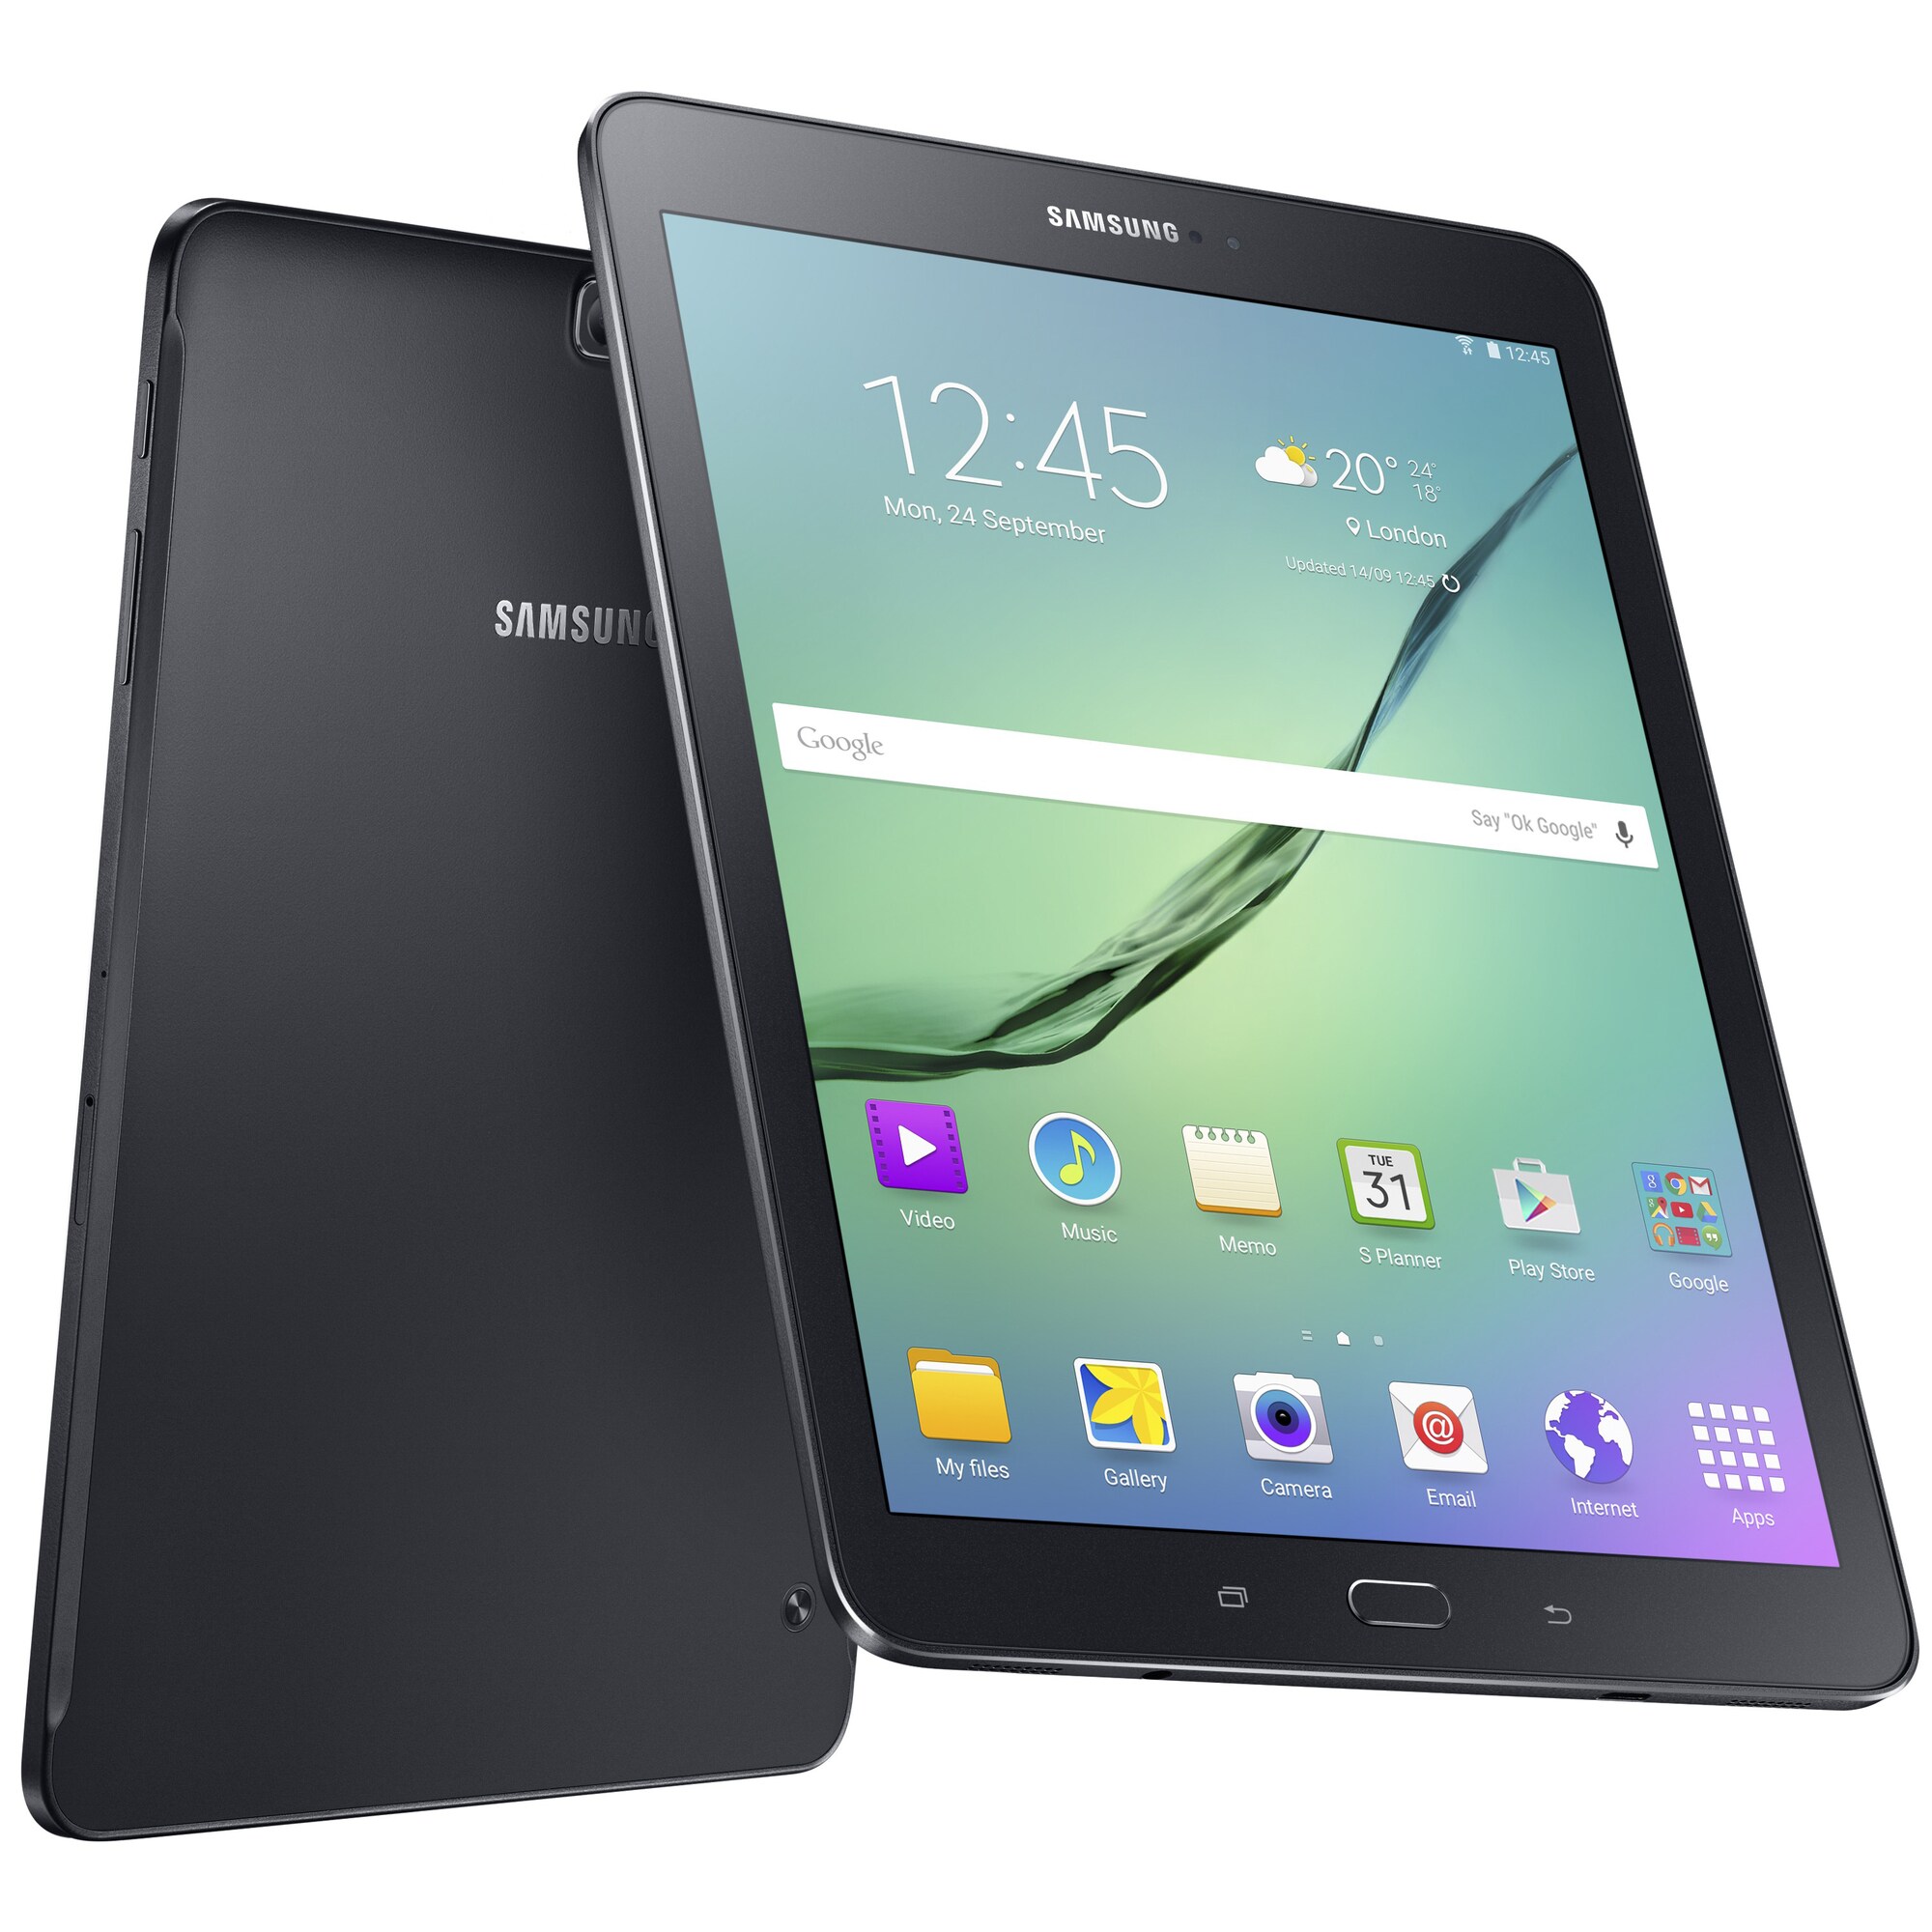 Samsung Galaxy Tab S2 9,7" 4G 2016 Ed. (svart) - iPad, Surfplatta ...